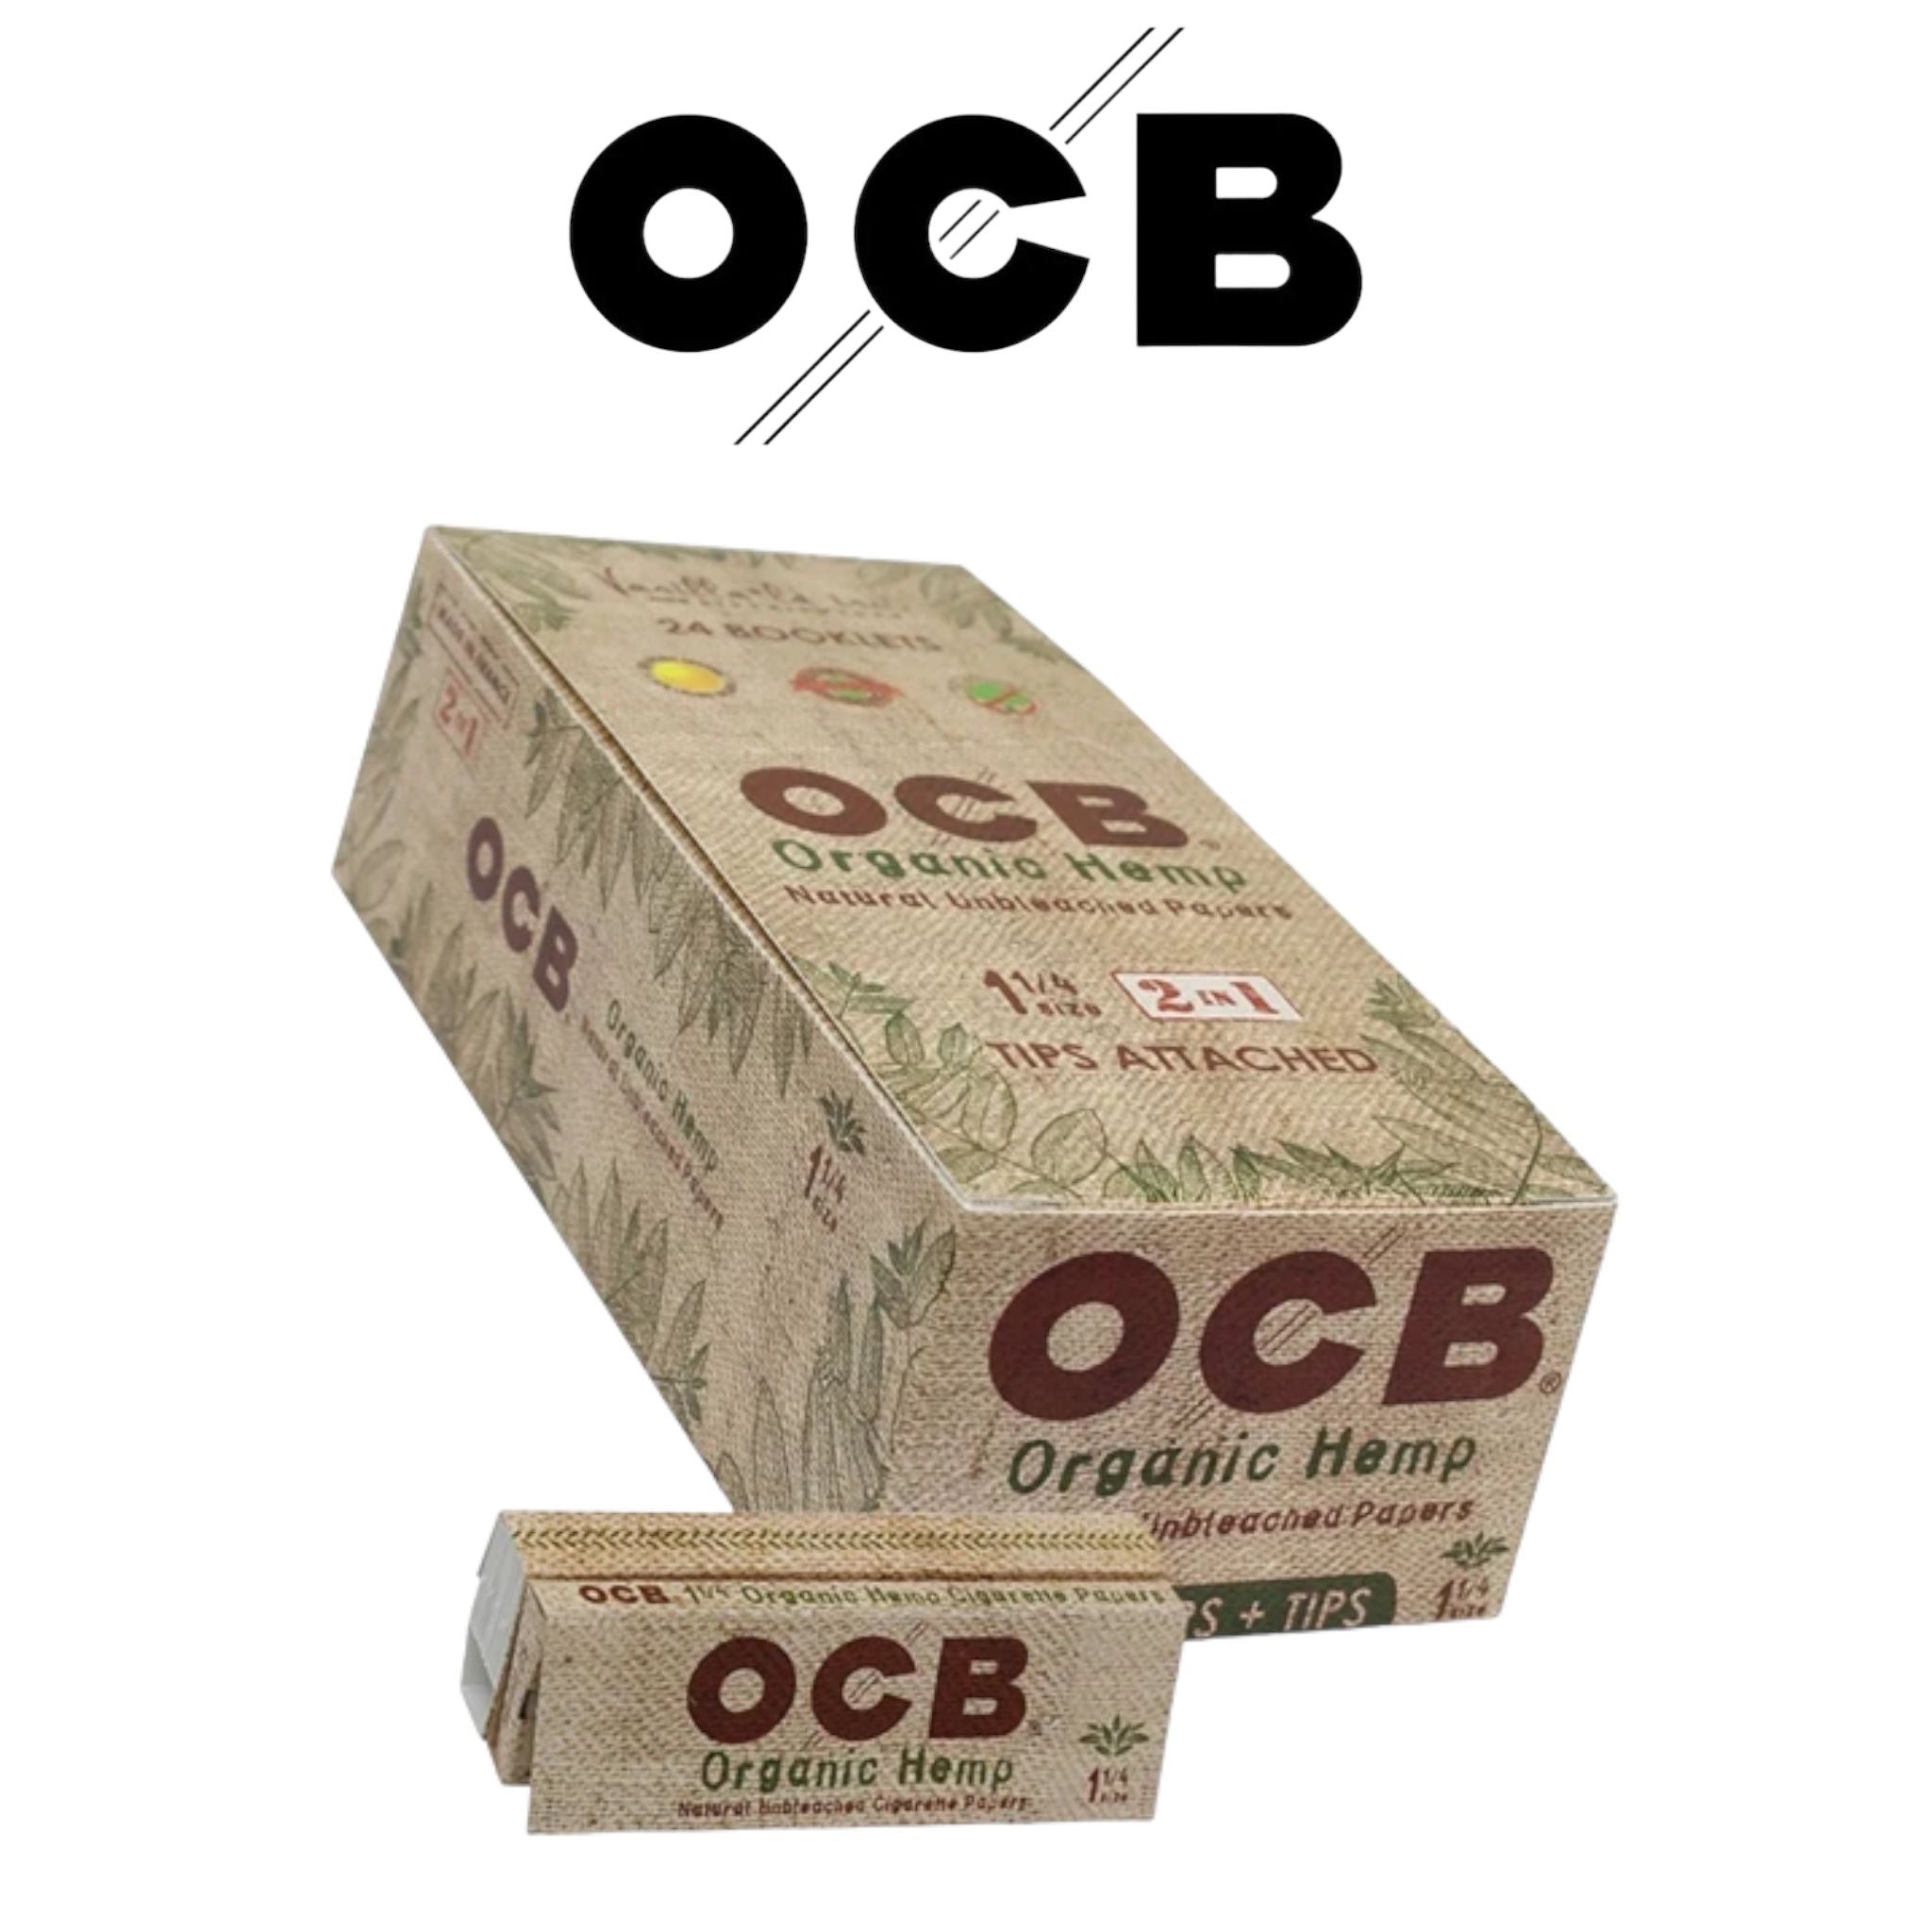 OCB Organic Hemp Notebook of 100 sheets